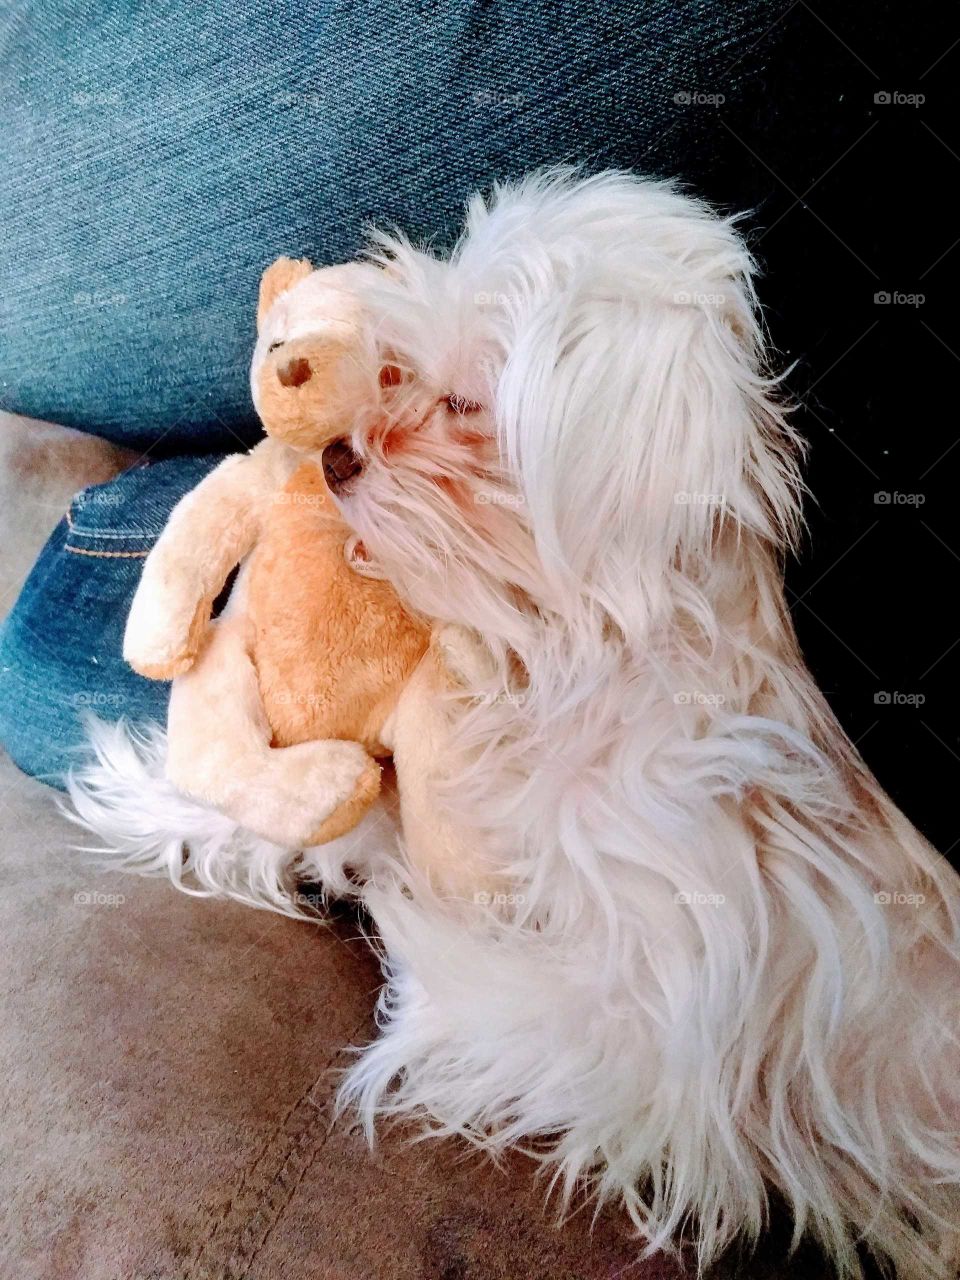 Puppy and teddy bear